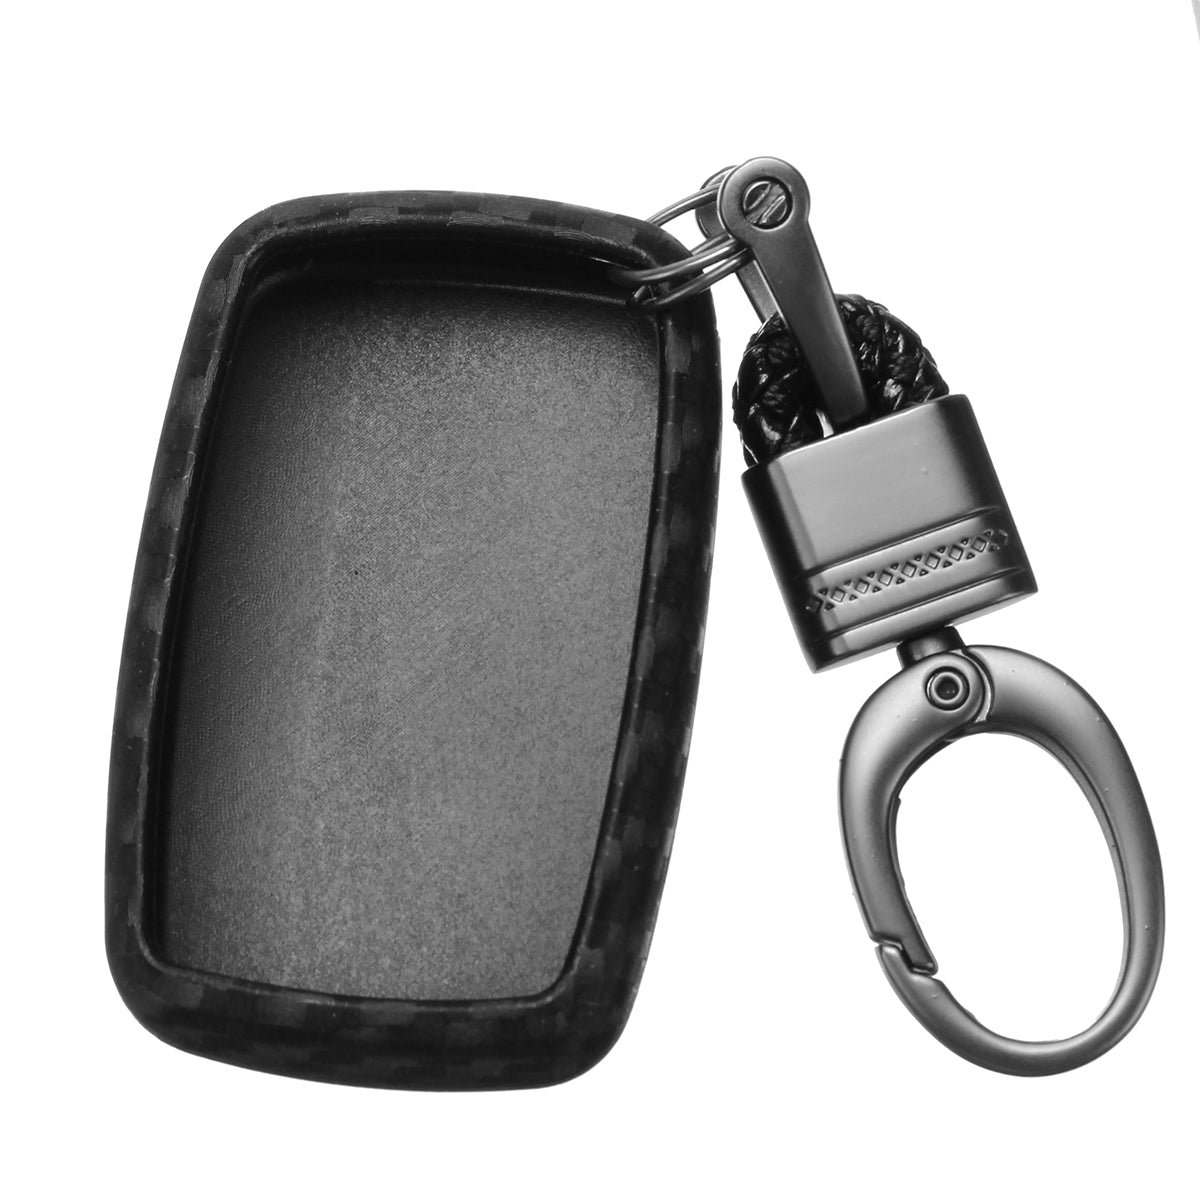 Slate Gray Carbon Fiber Car Remote Key Fob Chain Ring Case Cover For Land Rover Jaguar